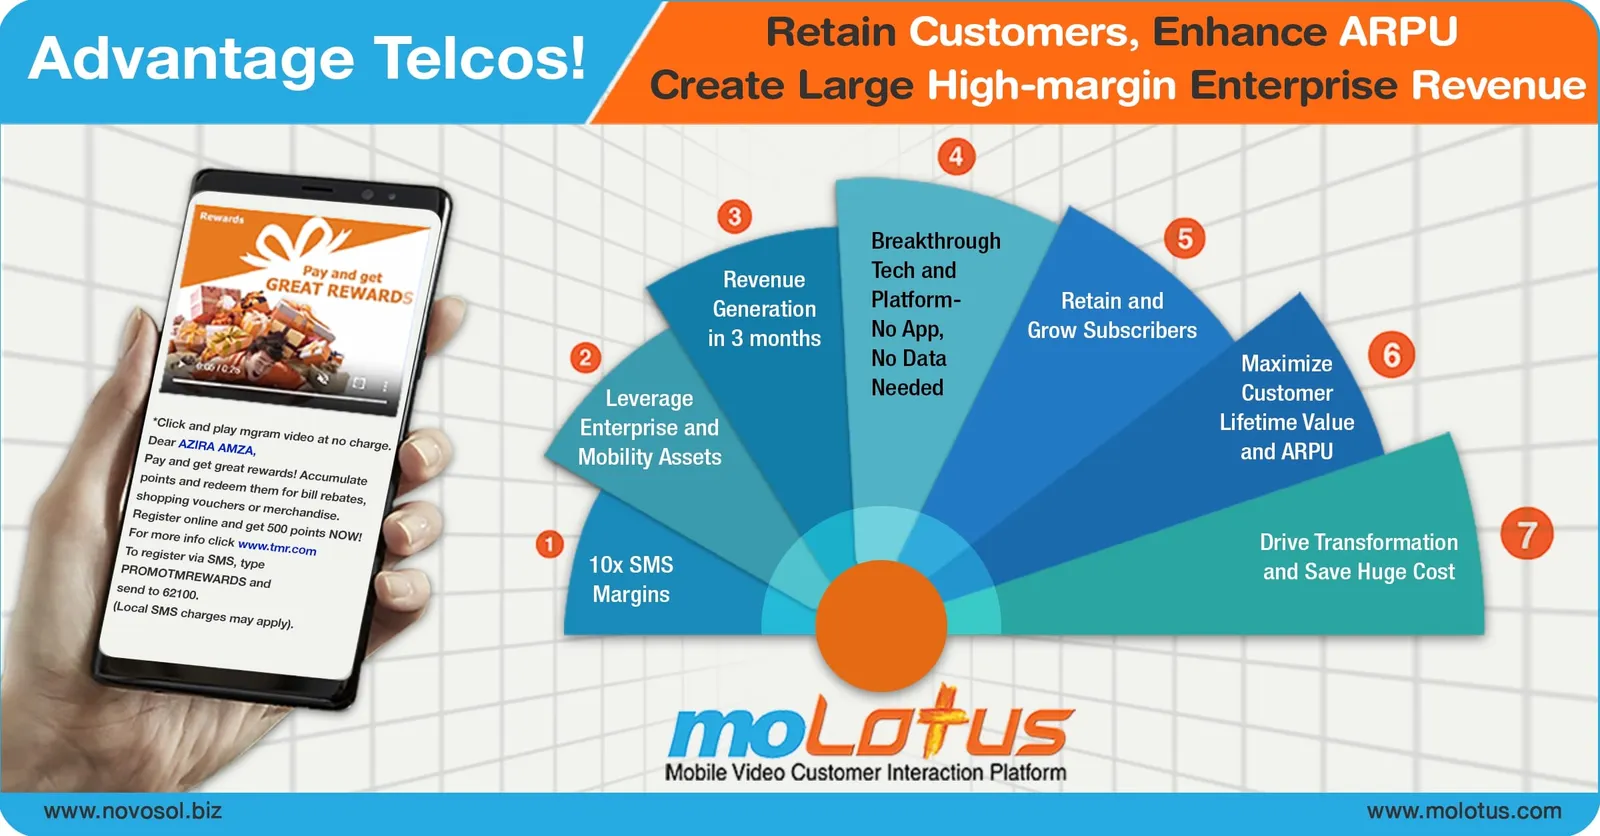 Telcos can boost enterprise revenues in just 3 months via moLotus